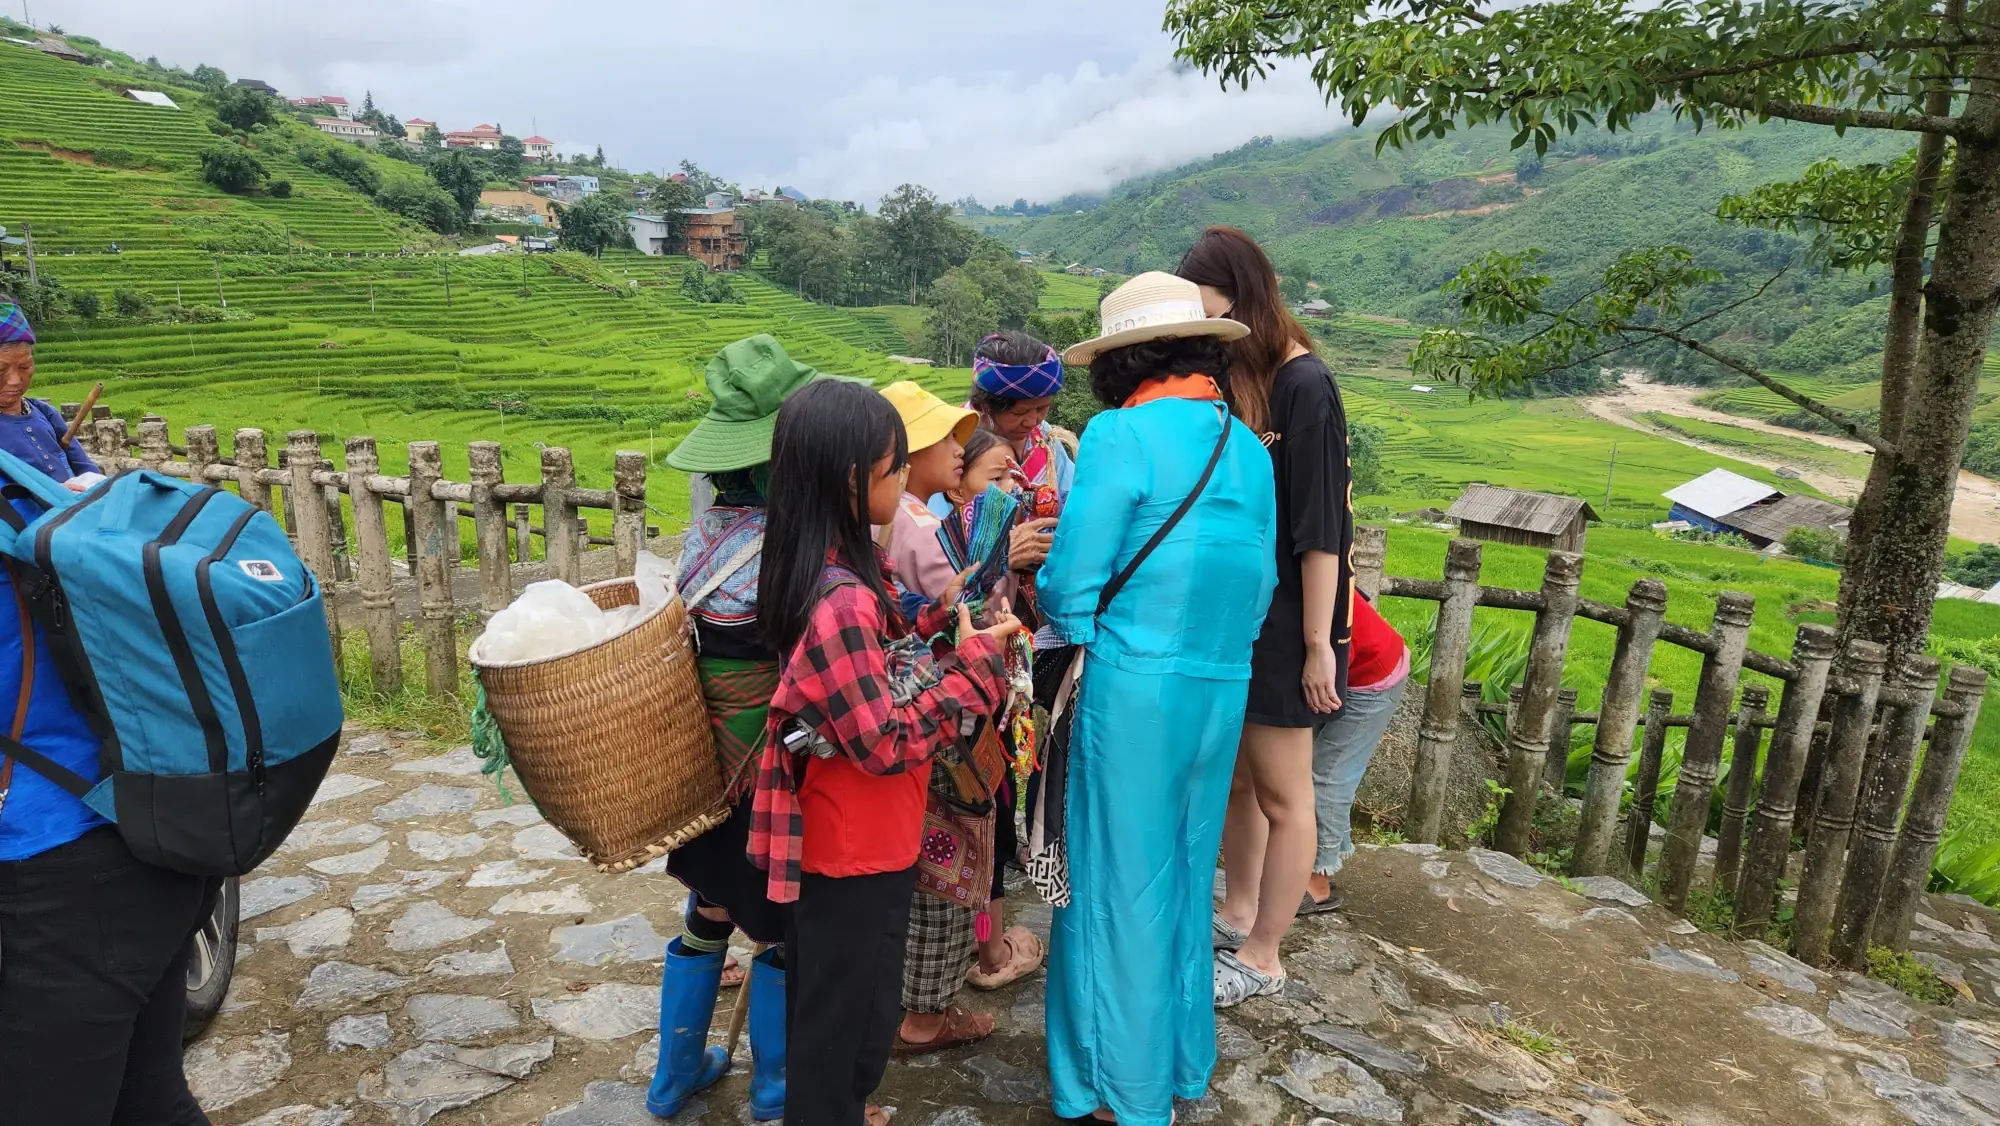 Our Muong Hoa Valley Entourage